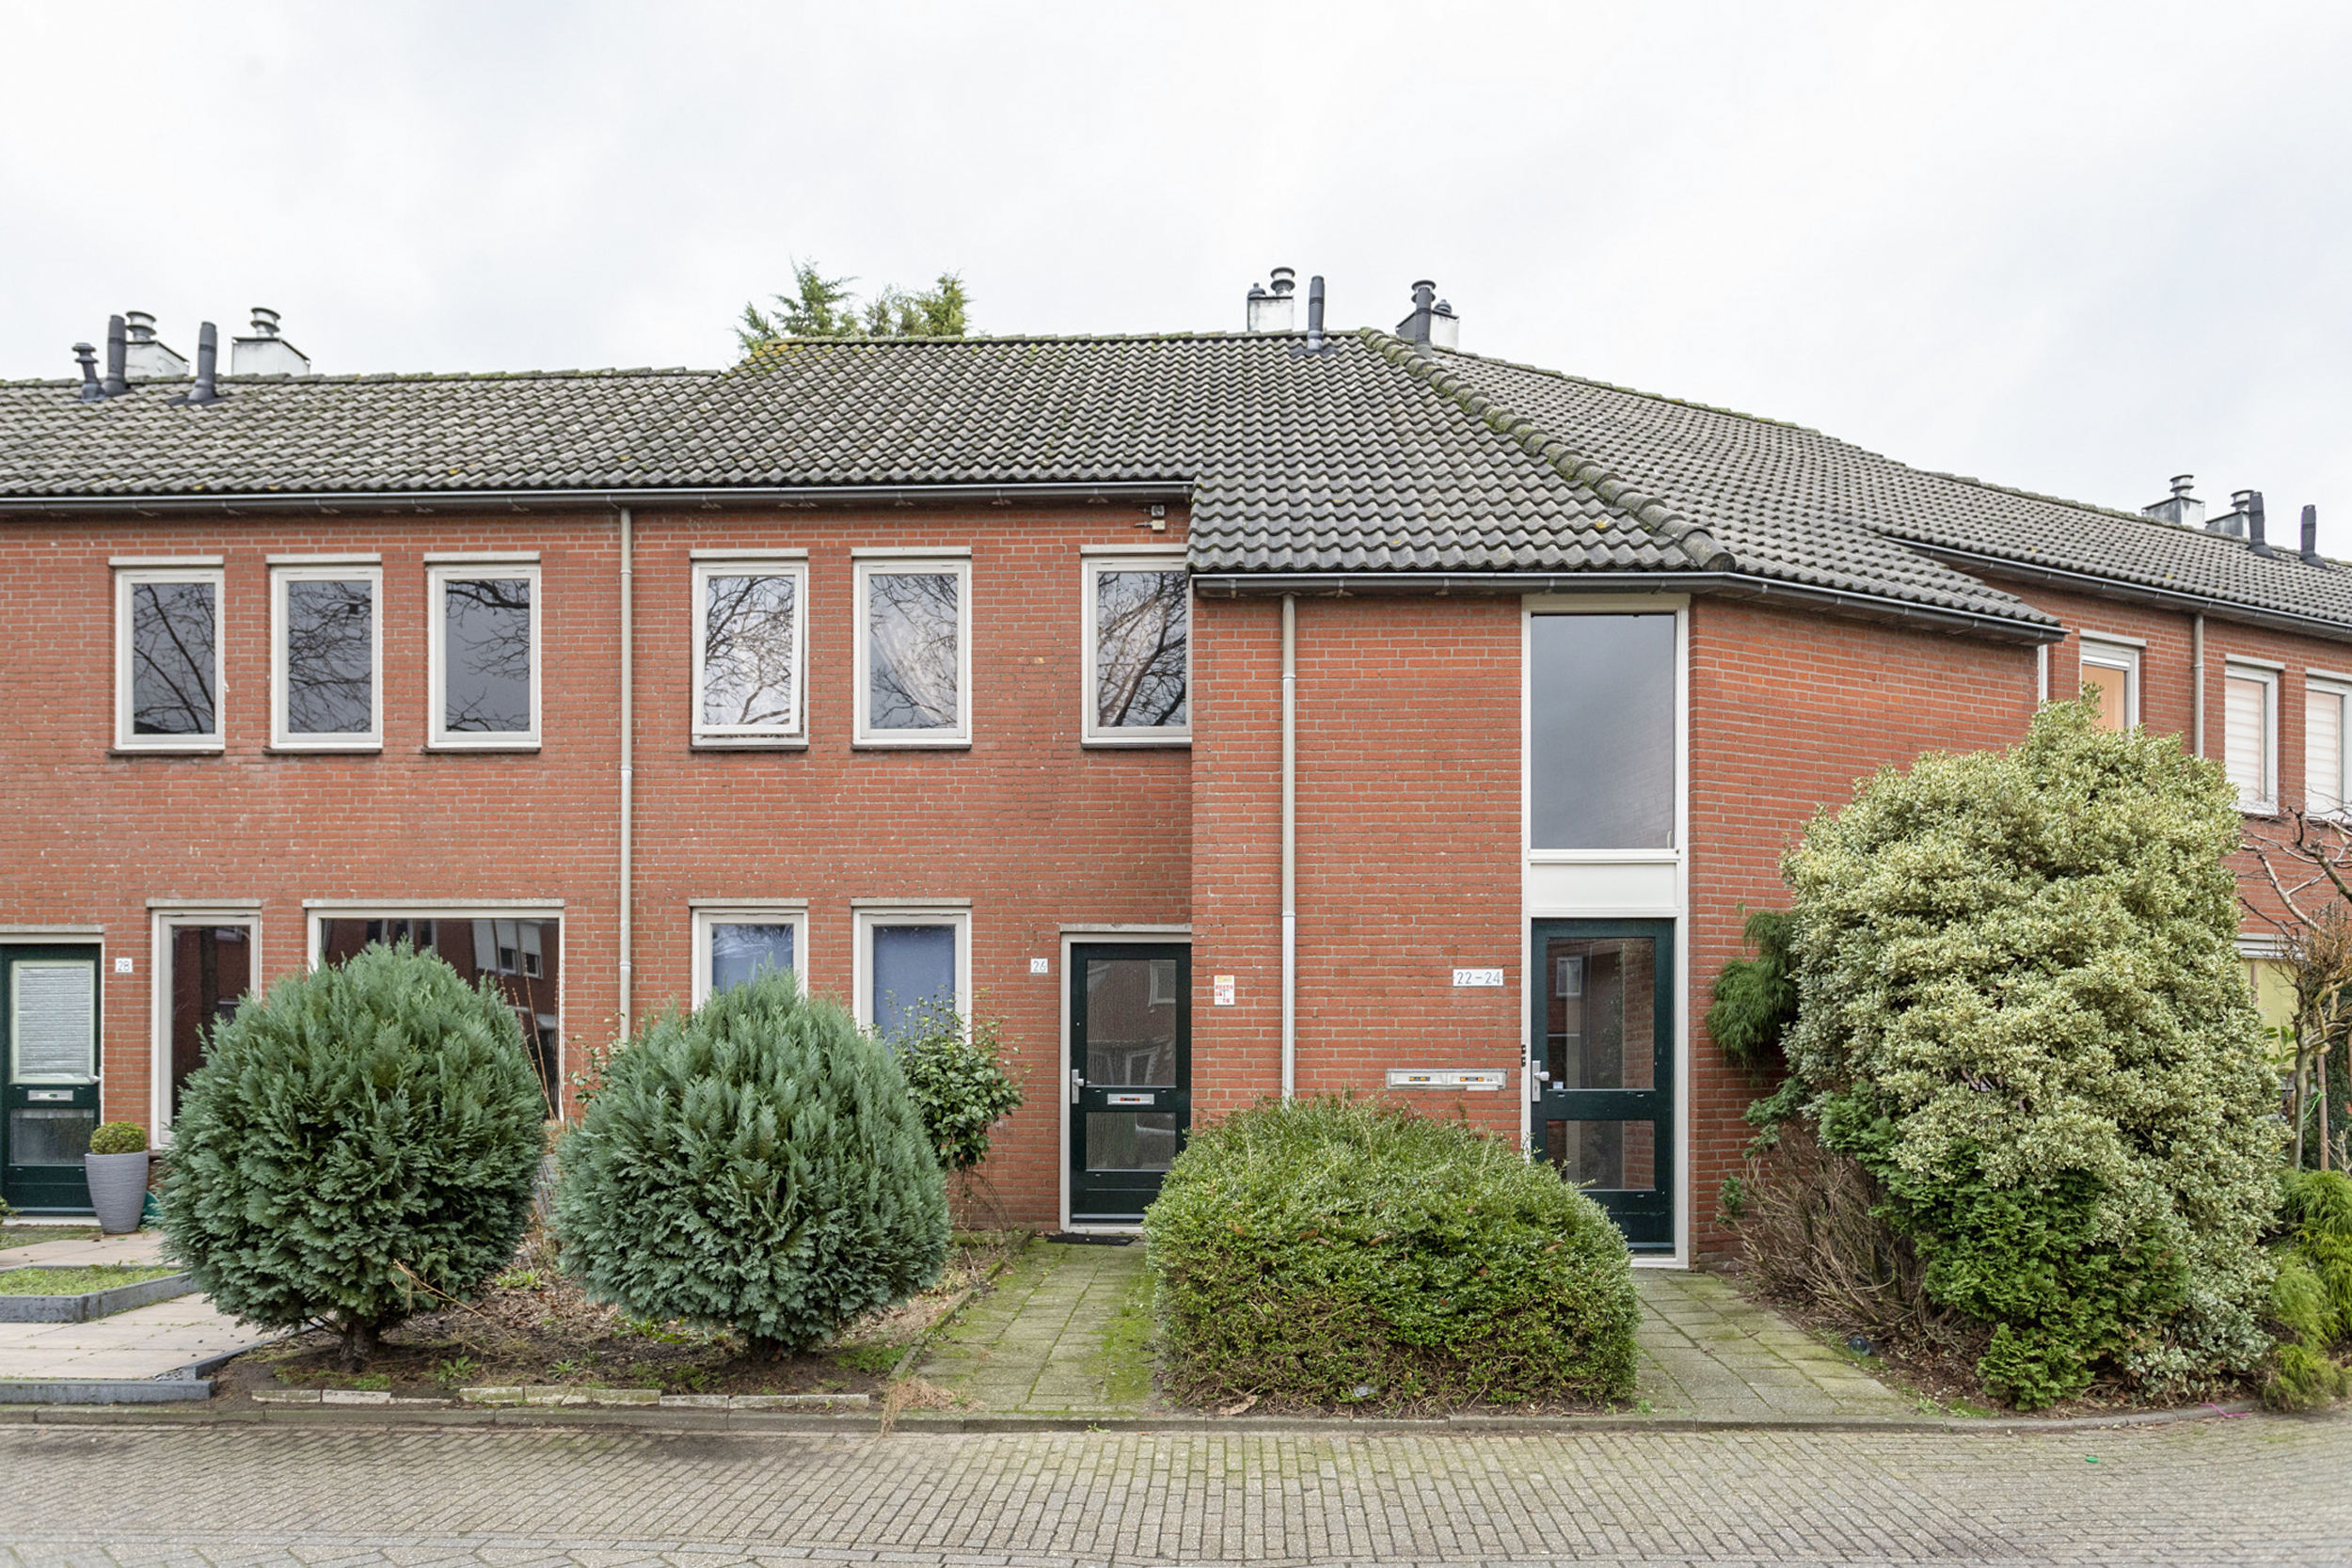 Lavendelring 26, 4881 GW Zundert, Nederland